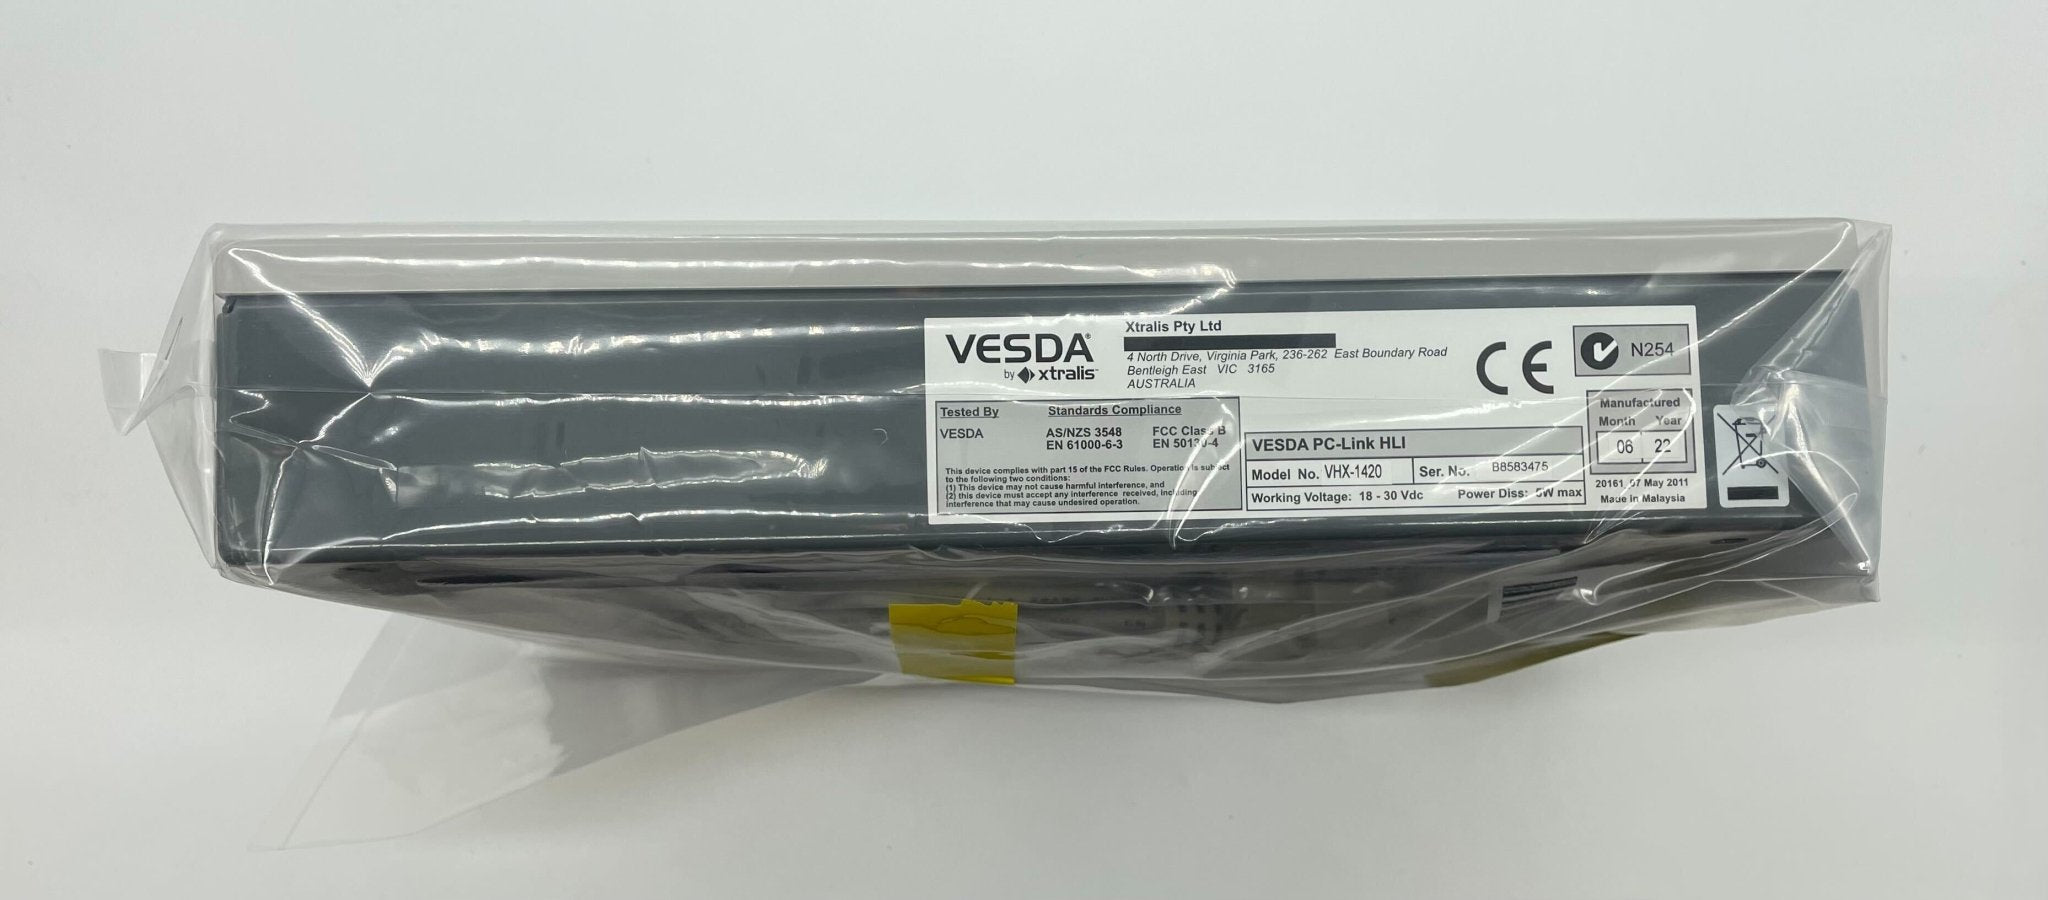 Vesda VHX-1420 - The Fire Alarm Supplier